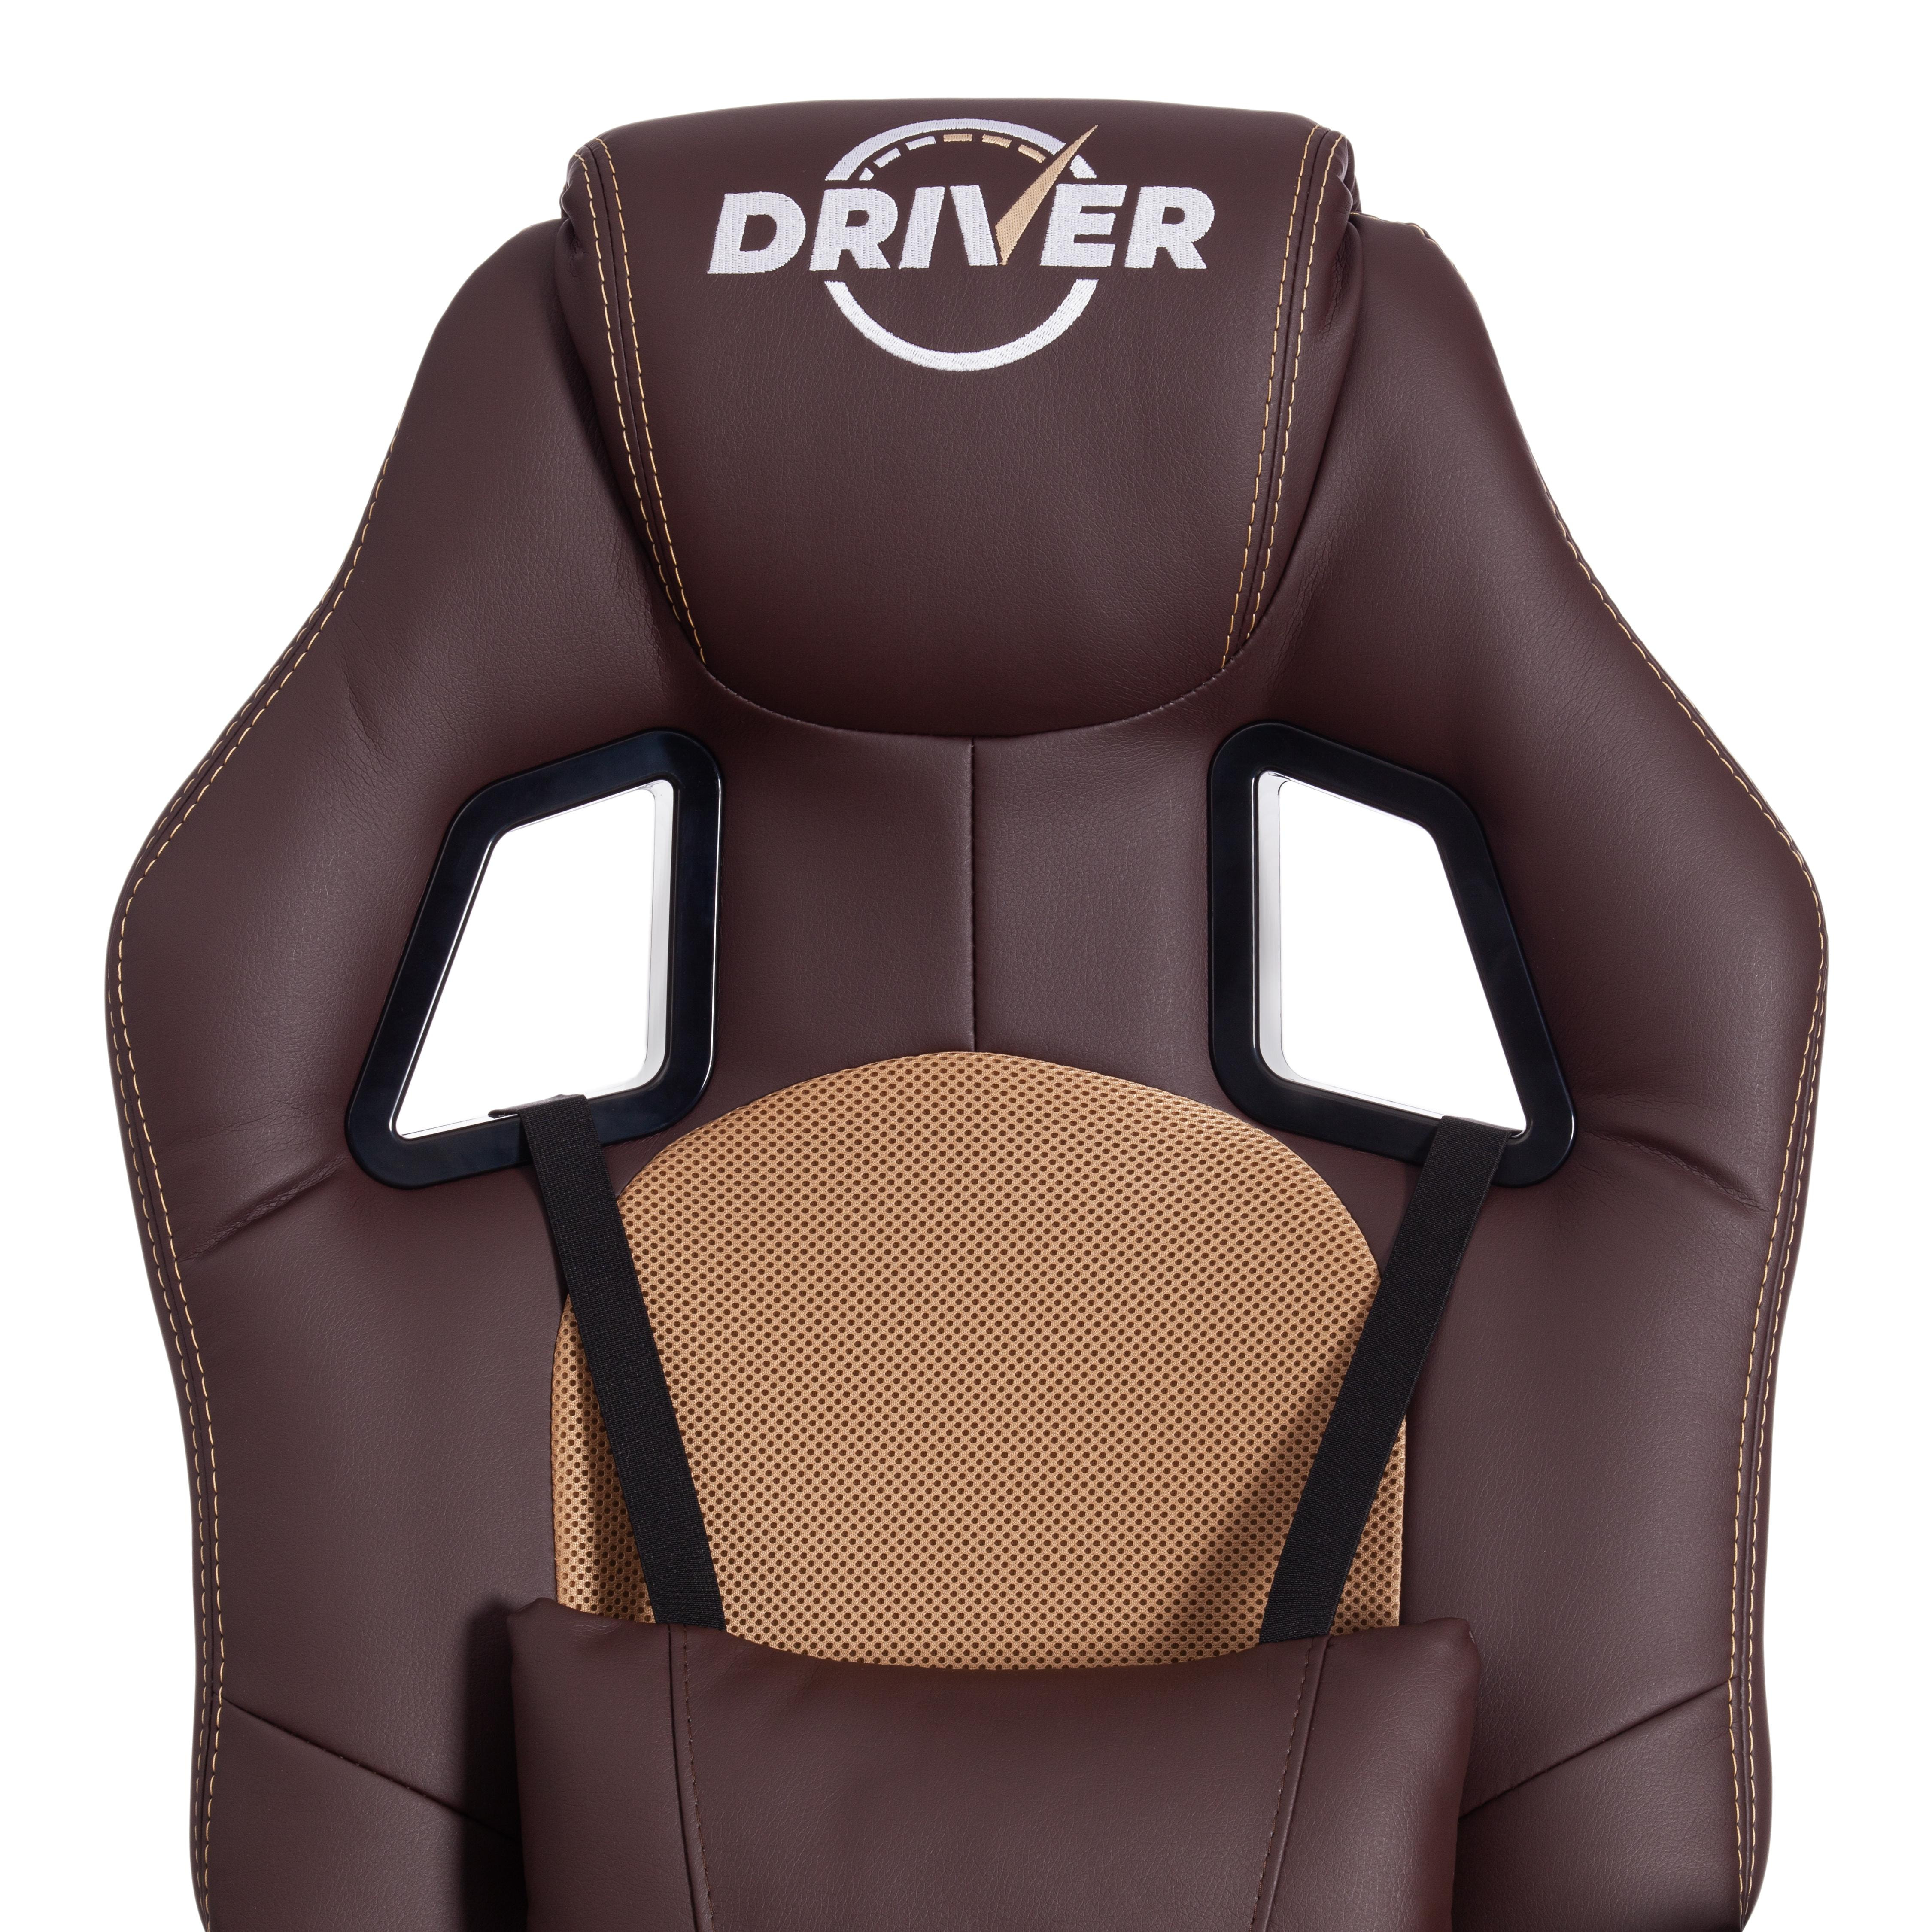 Кресло DRIVER (22) кож/зам/ткань, коричневый/бронза, 36-36/TW-21